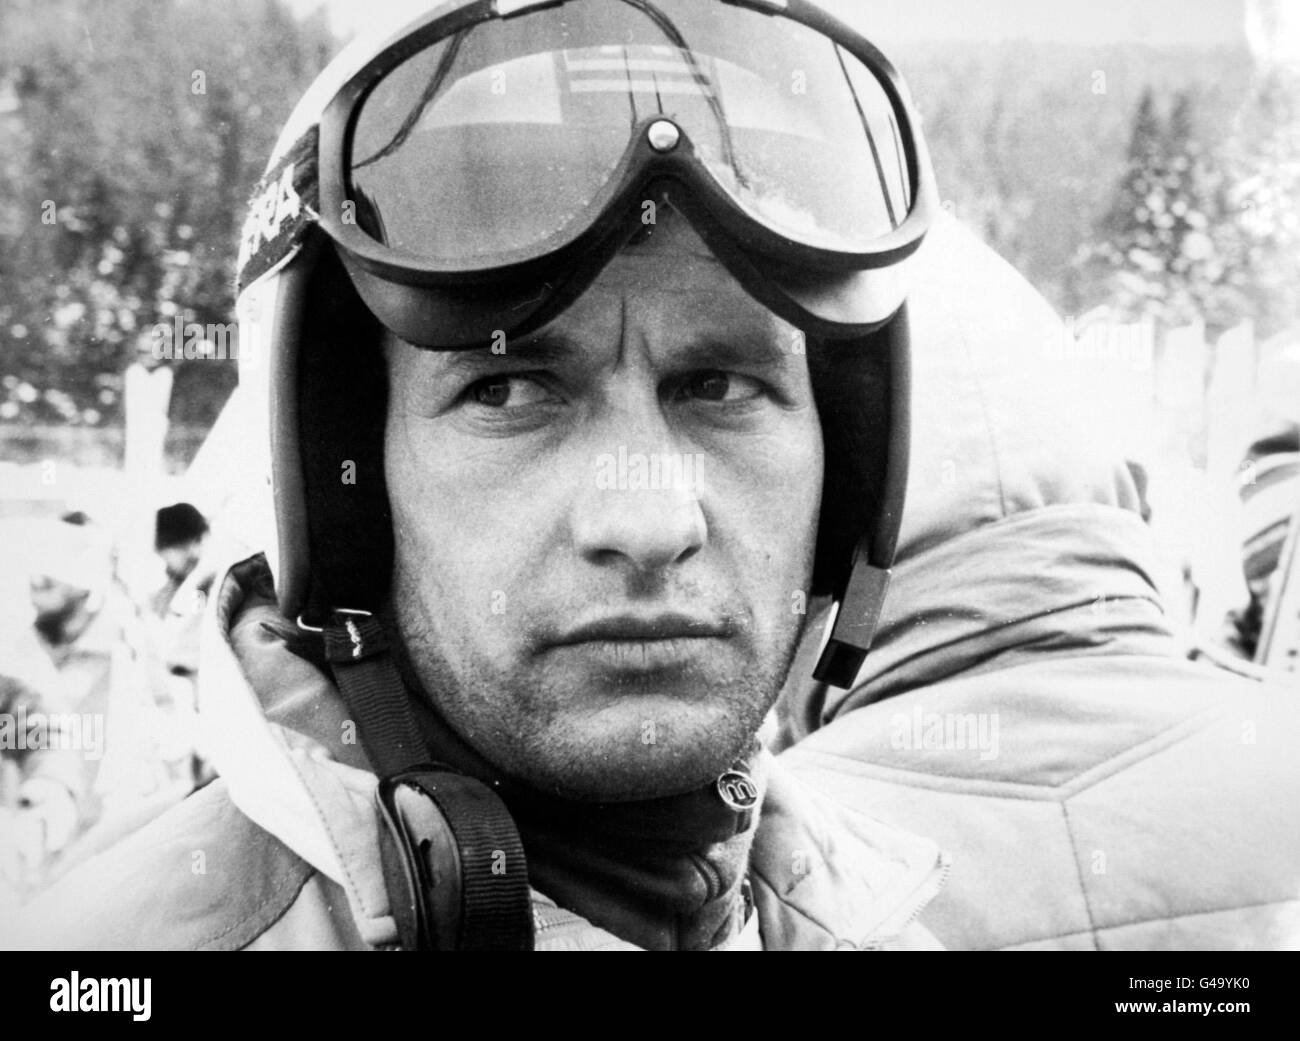 https://c8.alamy.com/comp/G49YK0/skiing-winter-olympic-games-sarajevo-1984-mens-downhill-franz-klammer-G49YK0.jpg